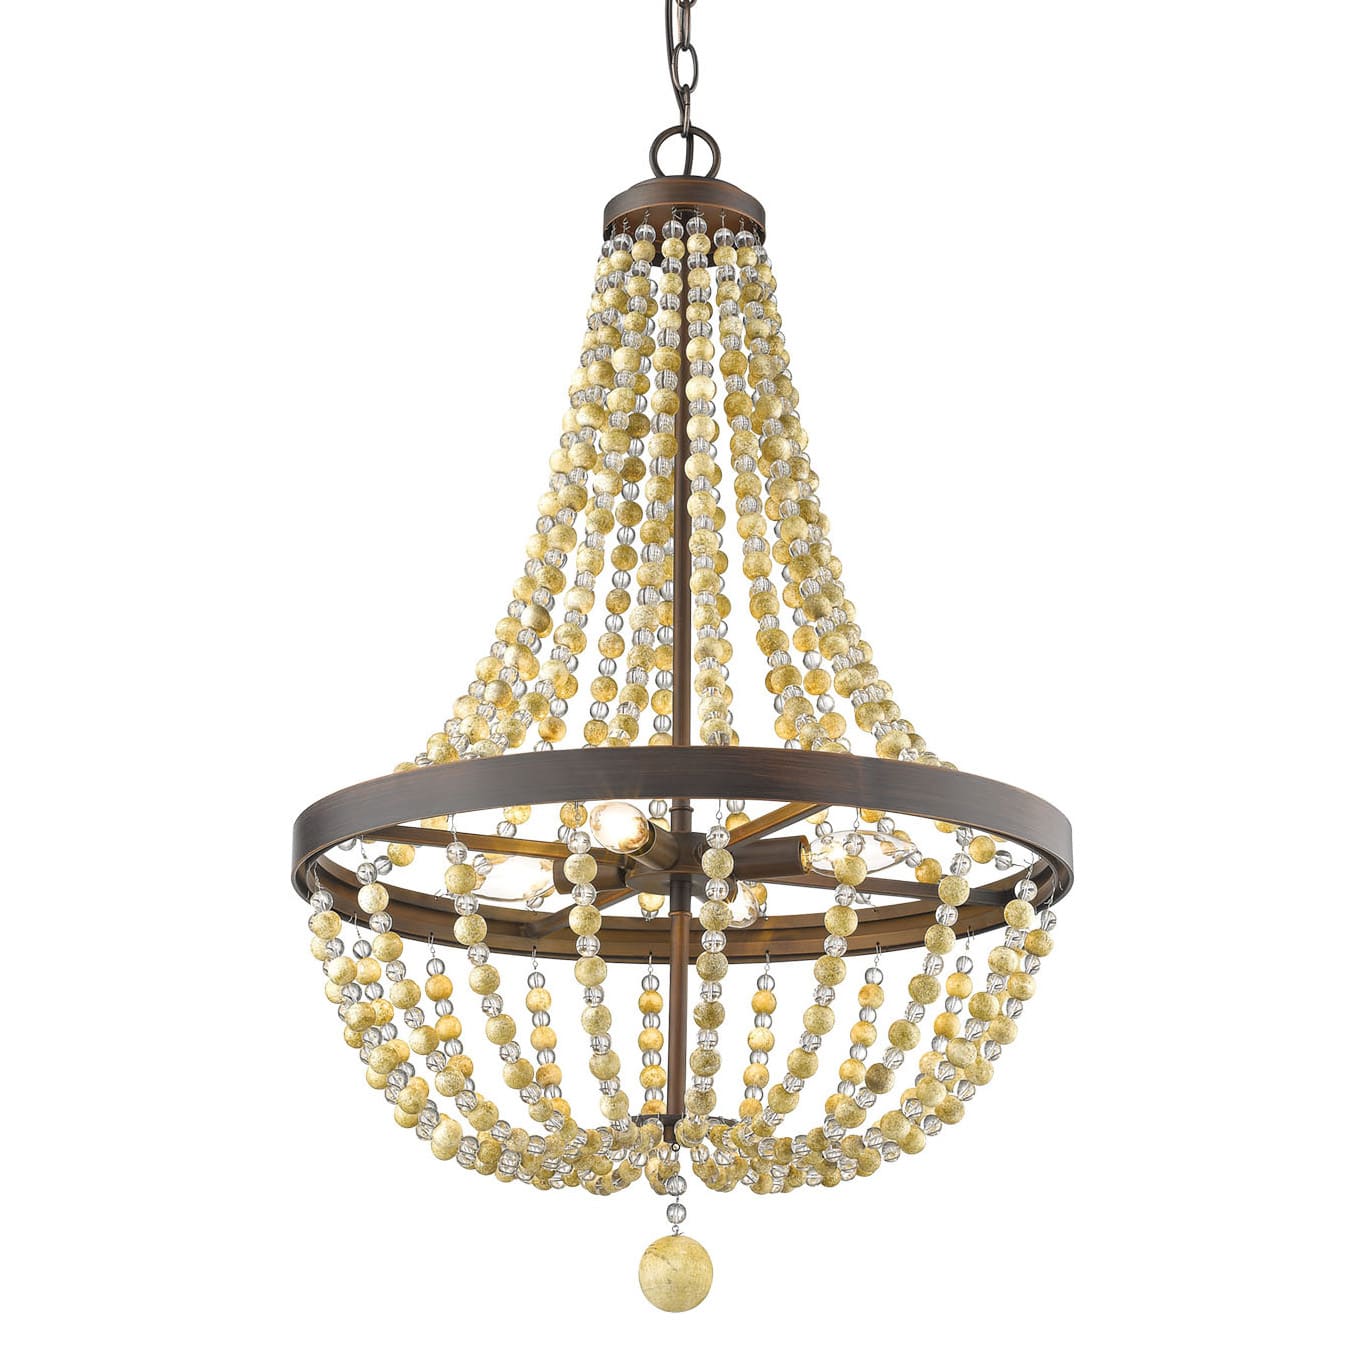 Millennium Lighting 1259RBZ 9 light chandelier rubbed bronze **